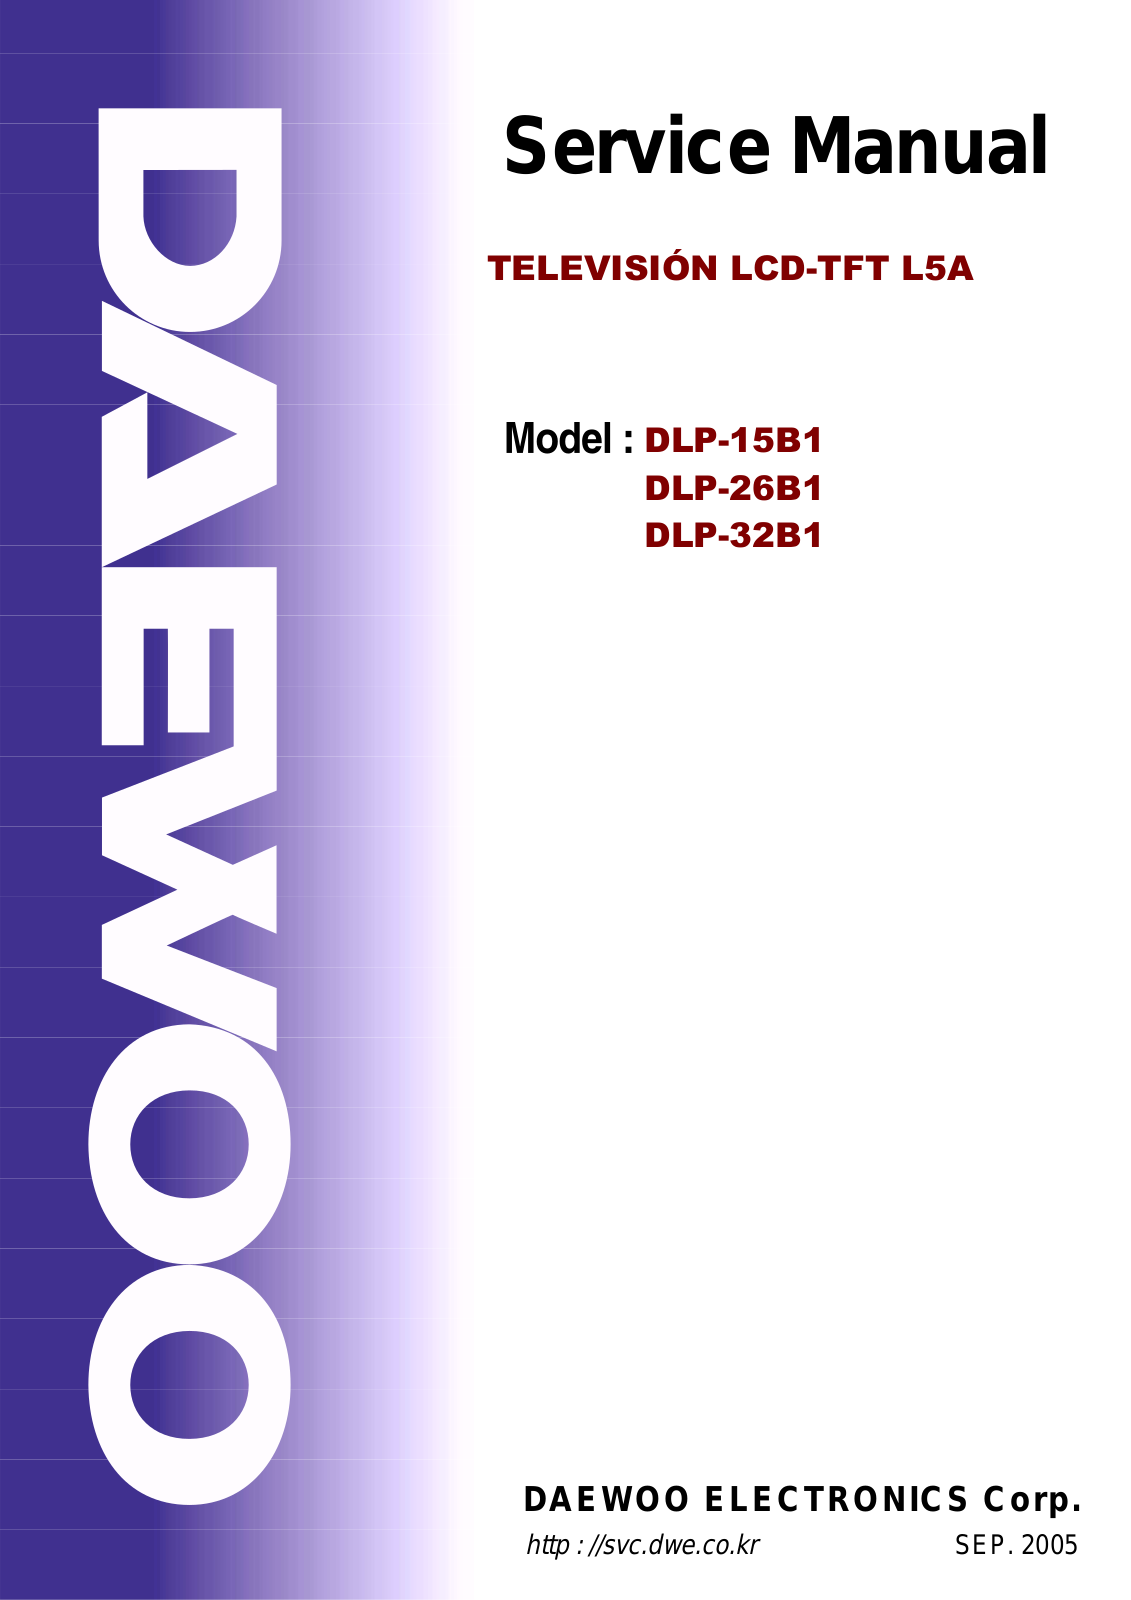 DAEWOO DLP-15B1, DLP-26B1, DLP-32B1 Service Manual